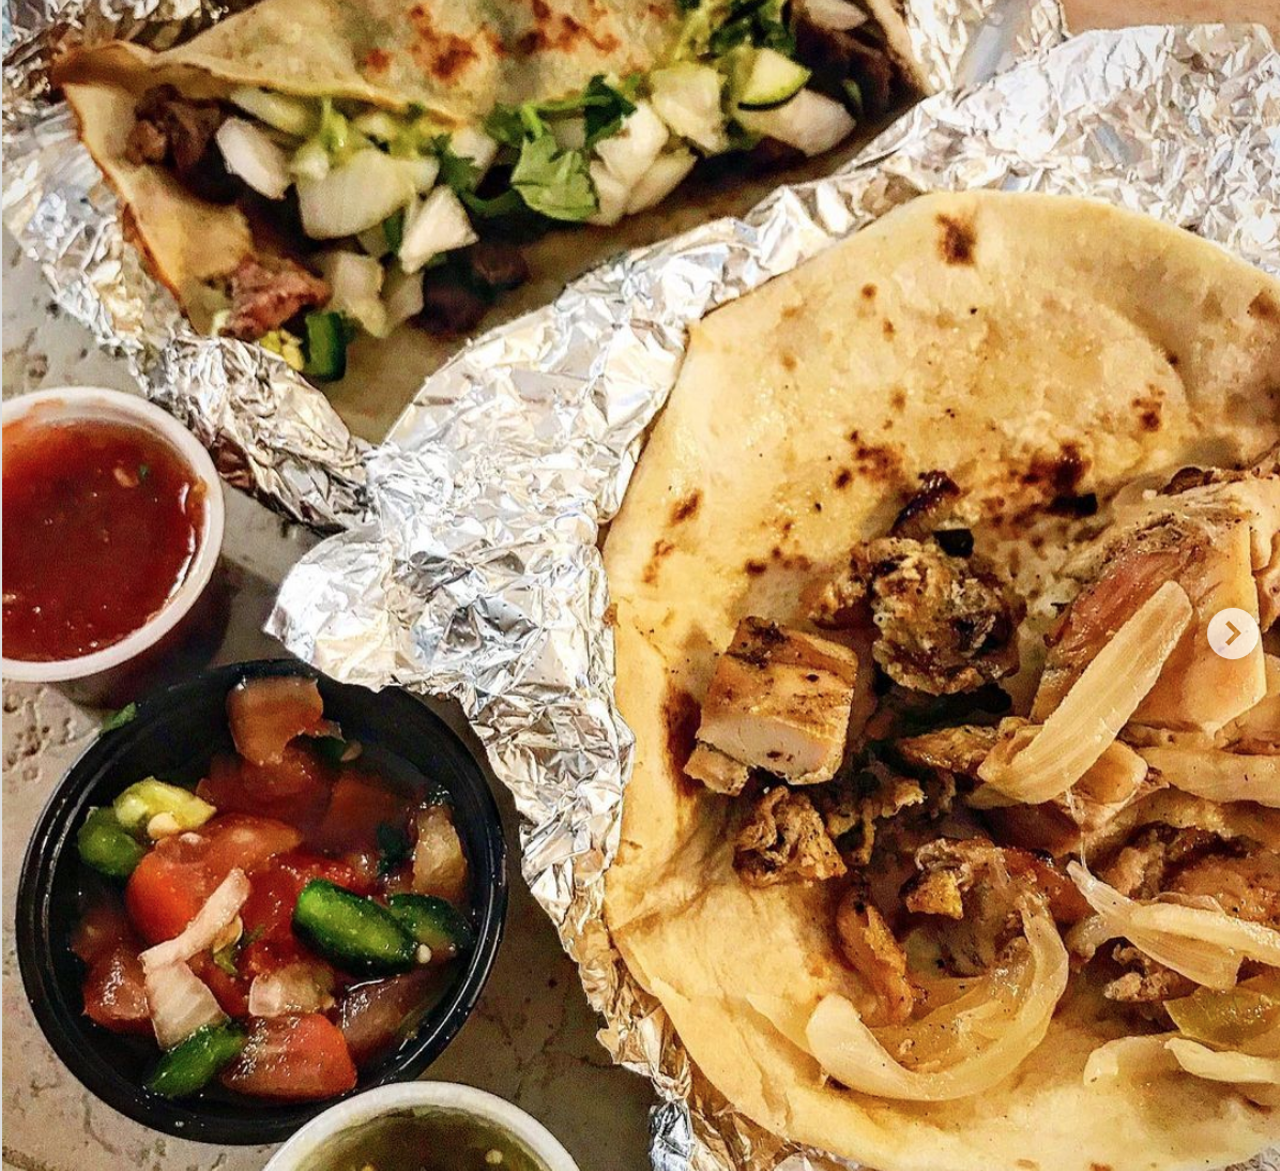 Best Breakfast Tacos
Las Palapas, Multiple locations, laspalapas.com
Photo via Instagram / moved2alamocity